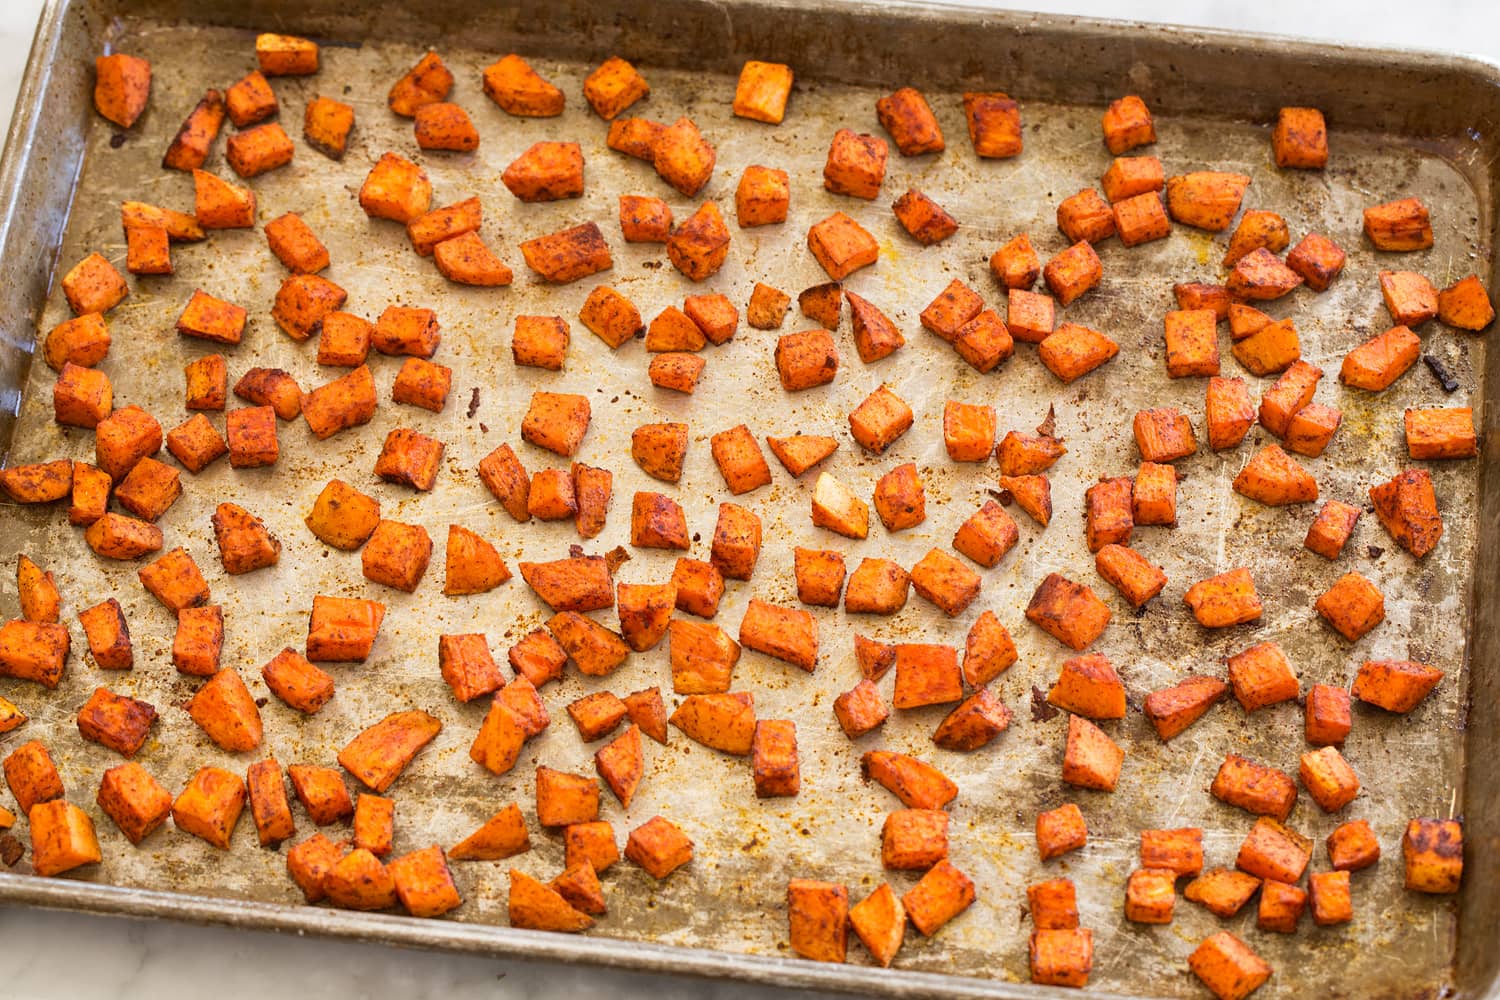 Roasted sweet potatoes on baking sheet.